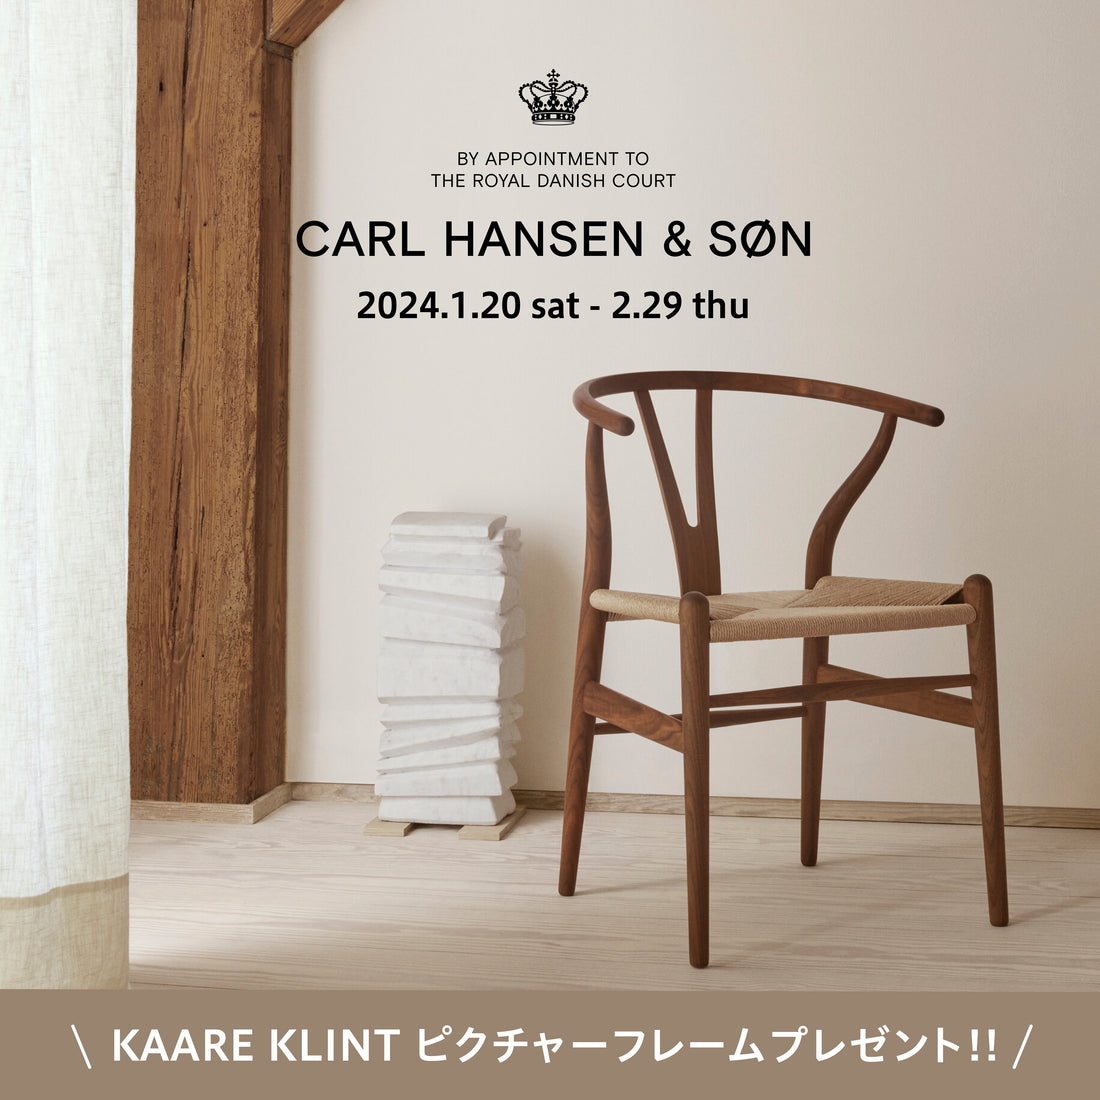 CARL HANSEN & SON 三大銘木 × デンマークデザイン プレゼントキャンペーン